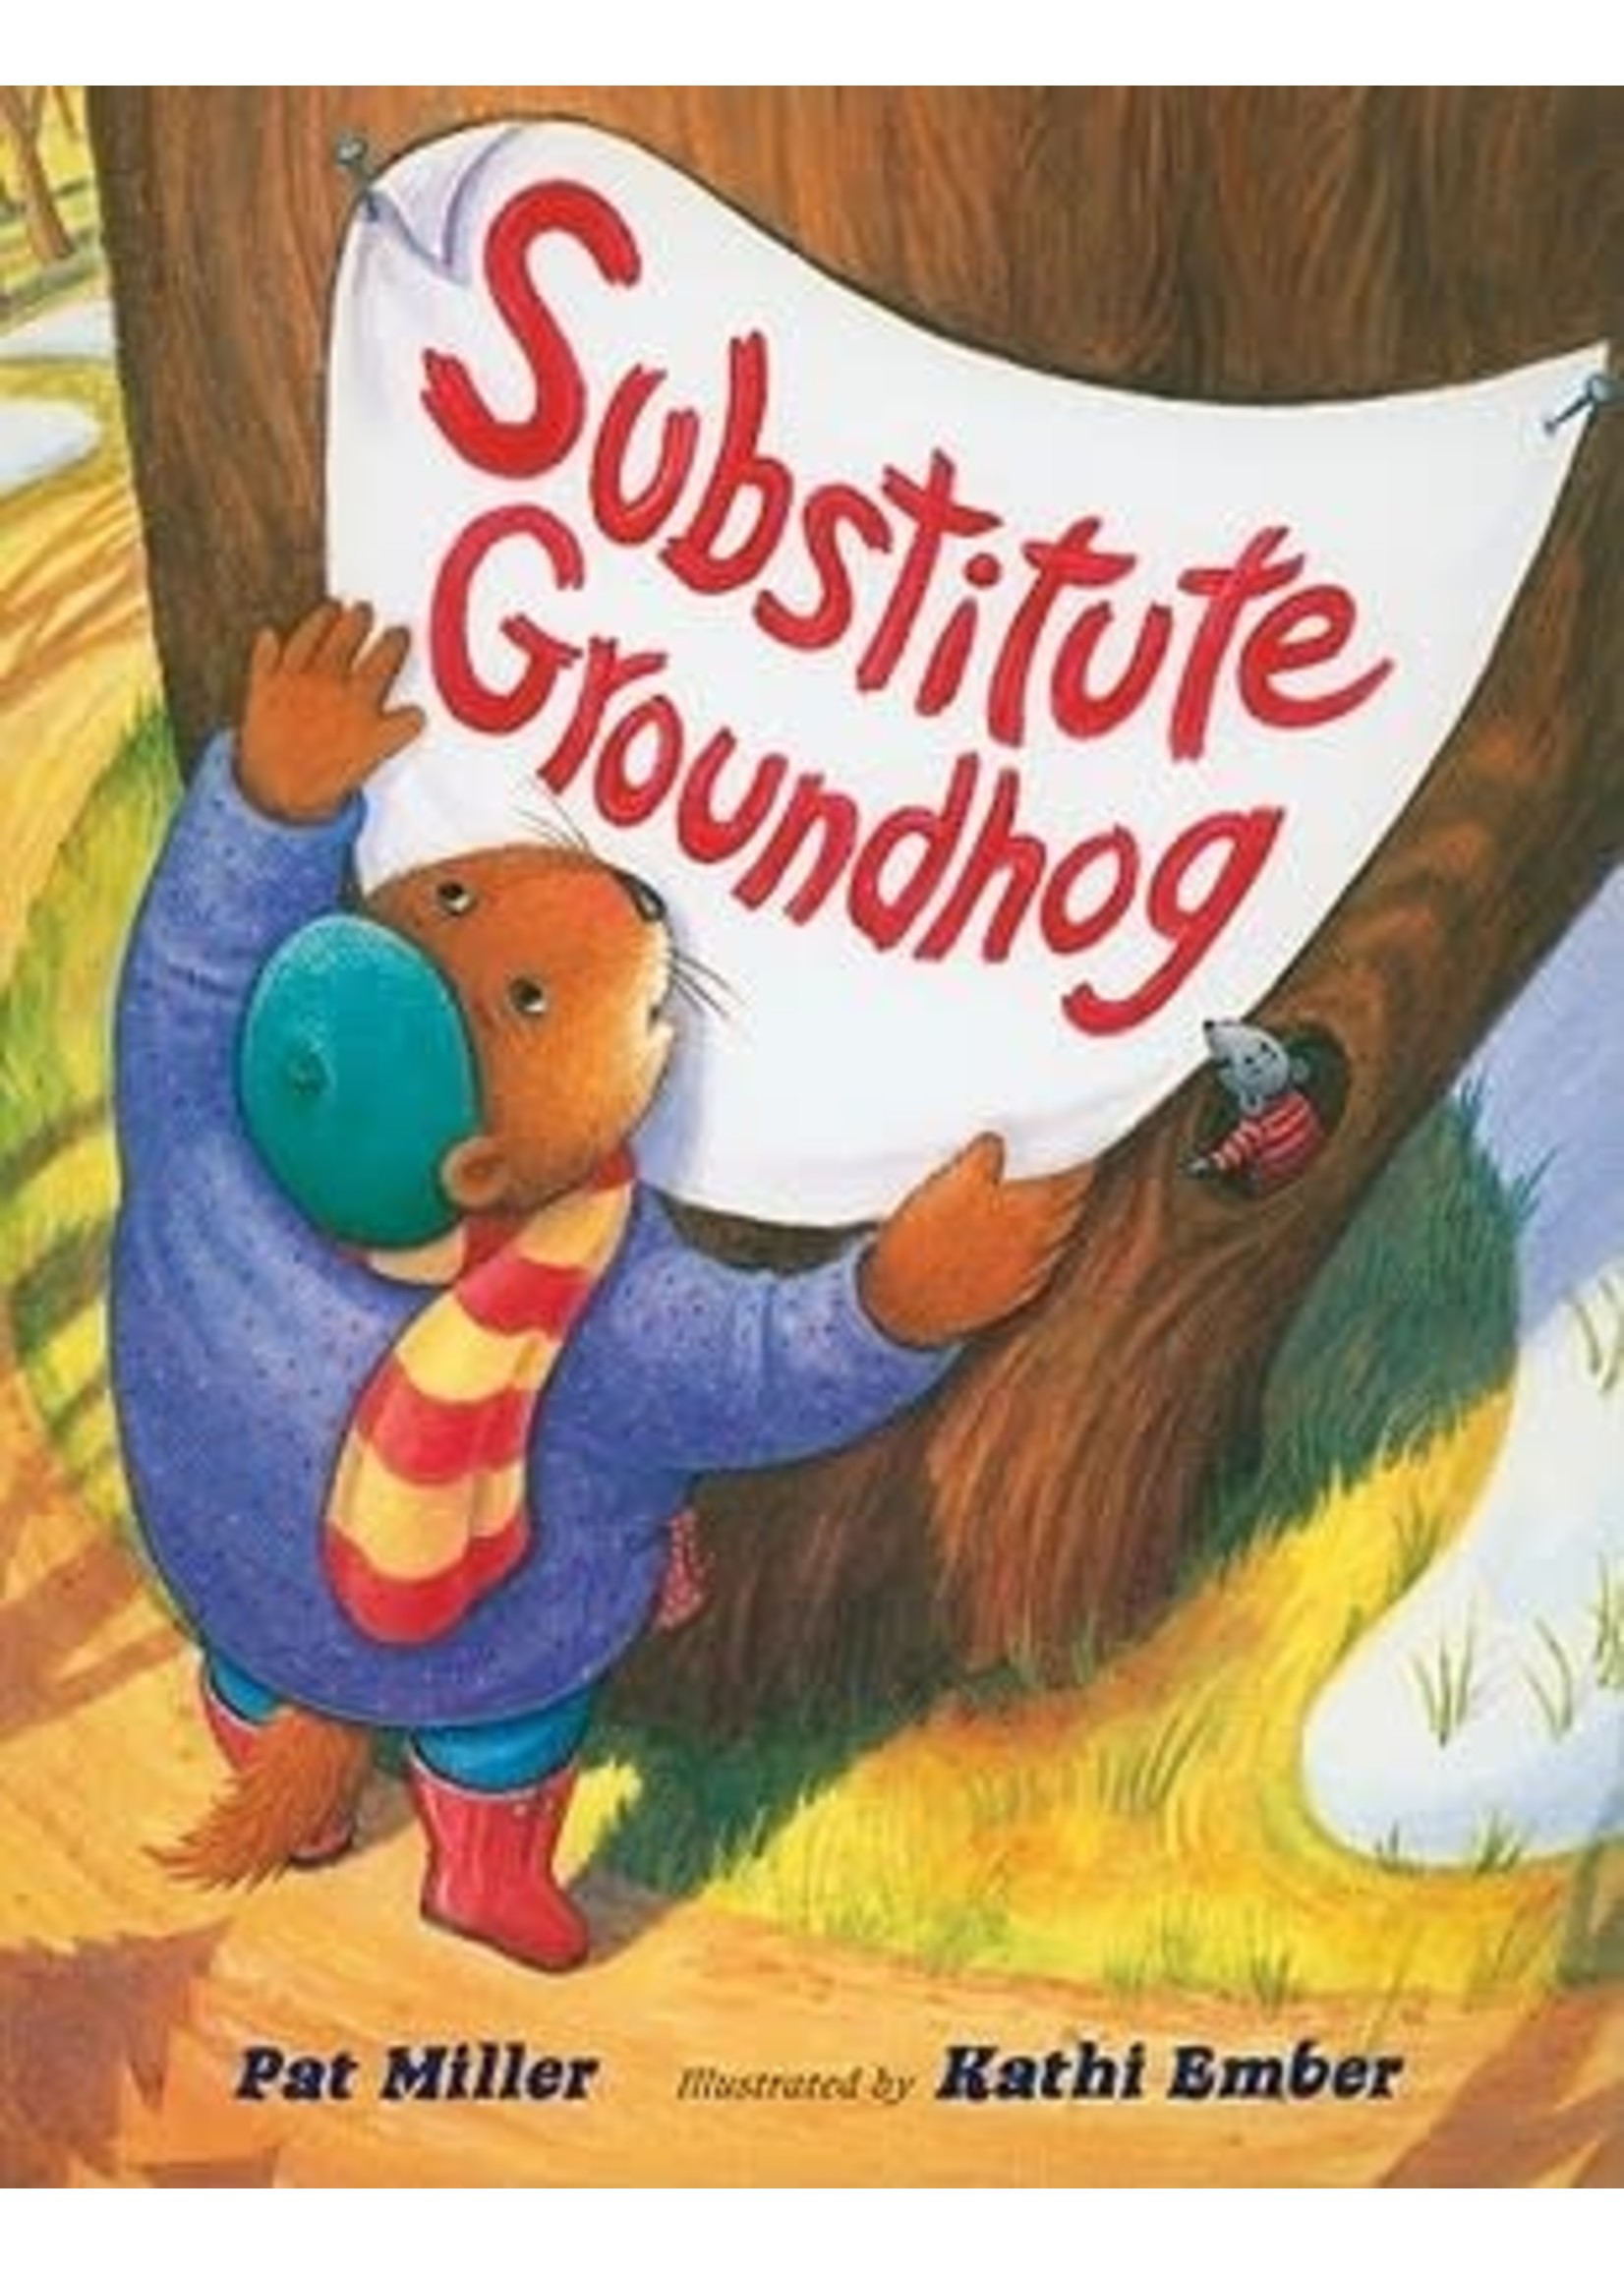 Substitute Groundhog by Pat Miller